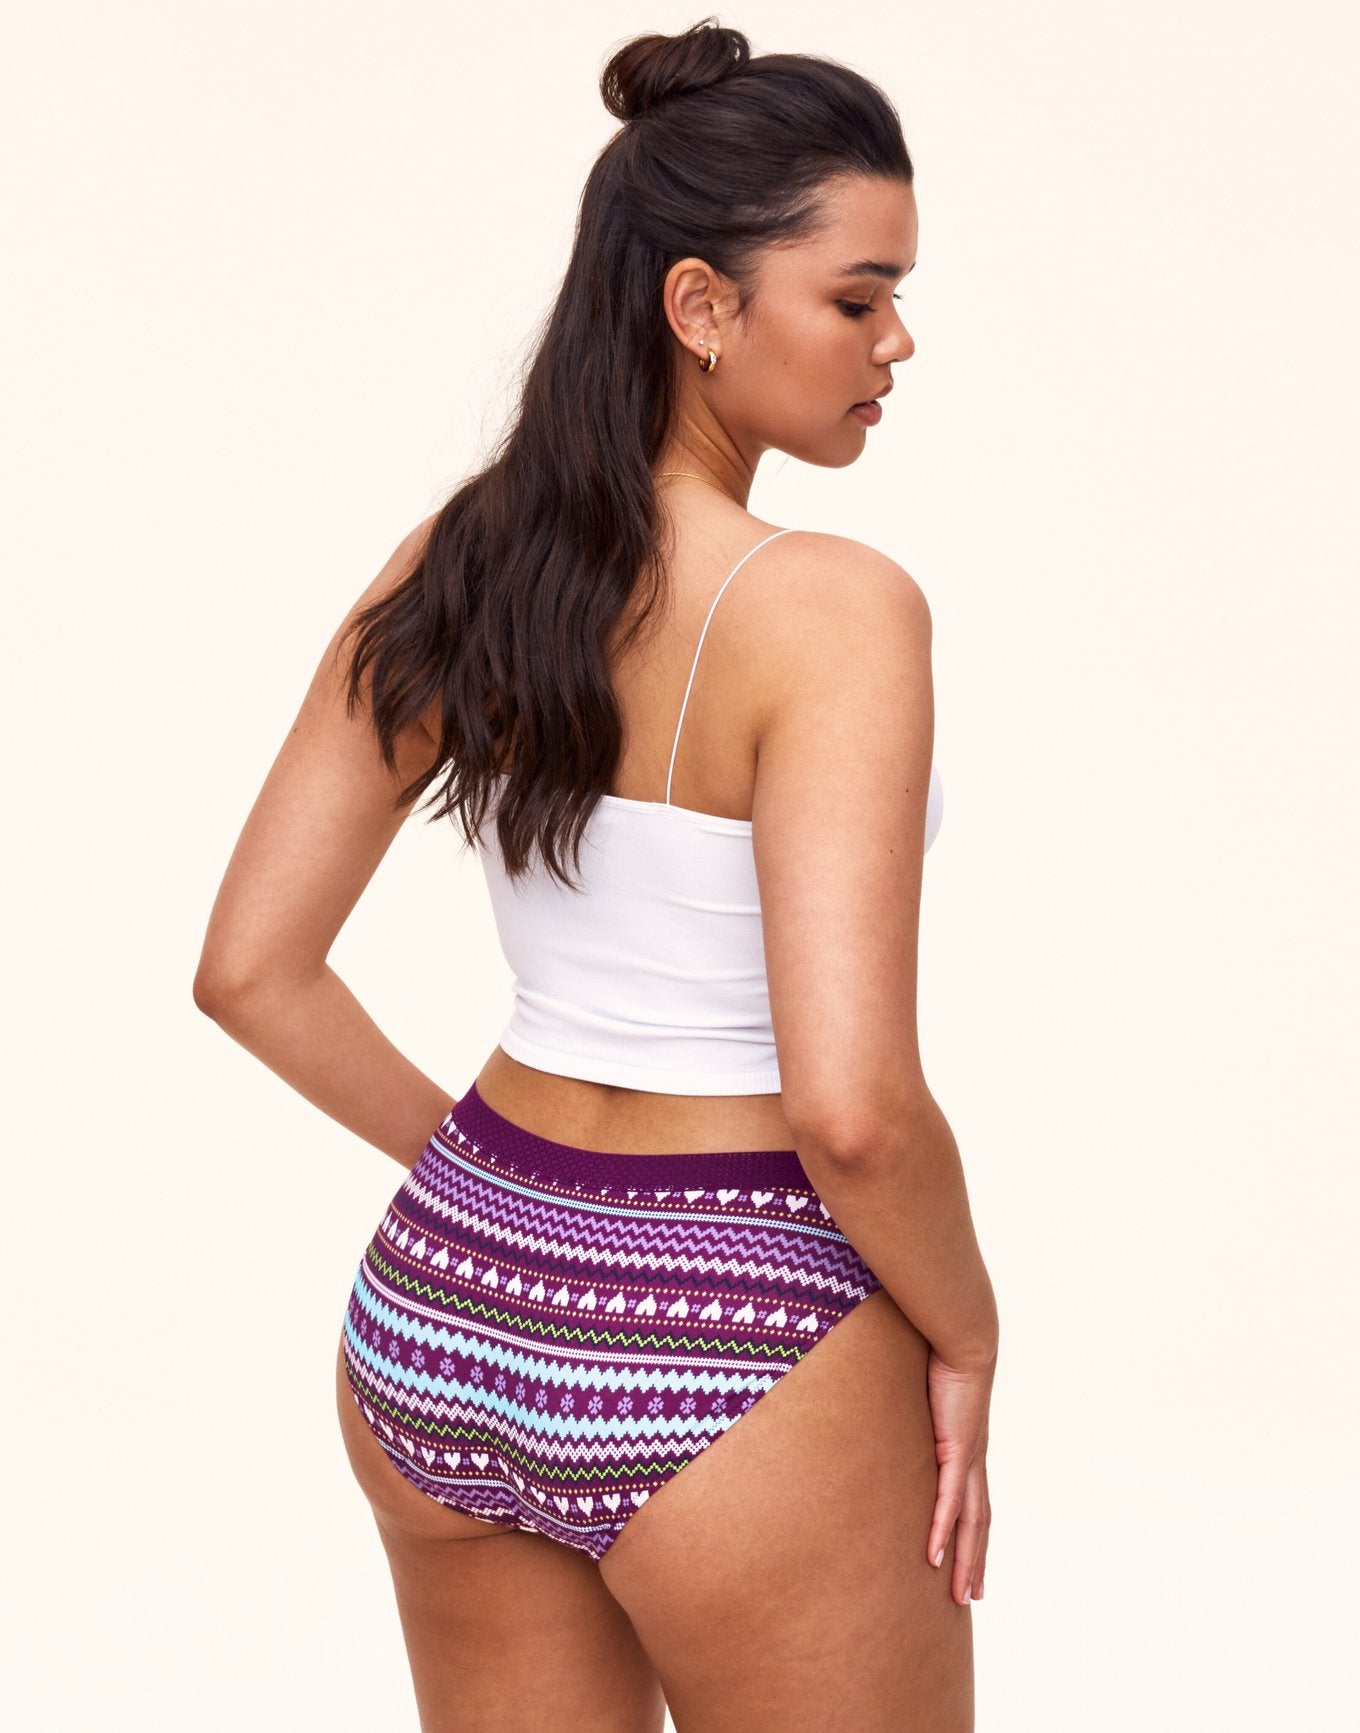 Joyja Katelin period-proof panty in color Joyful Fair Isle C01 and shape bikini